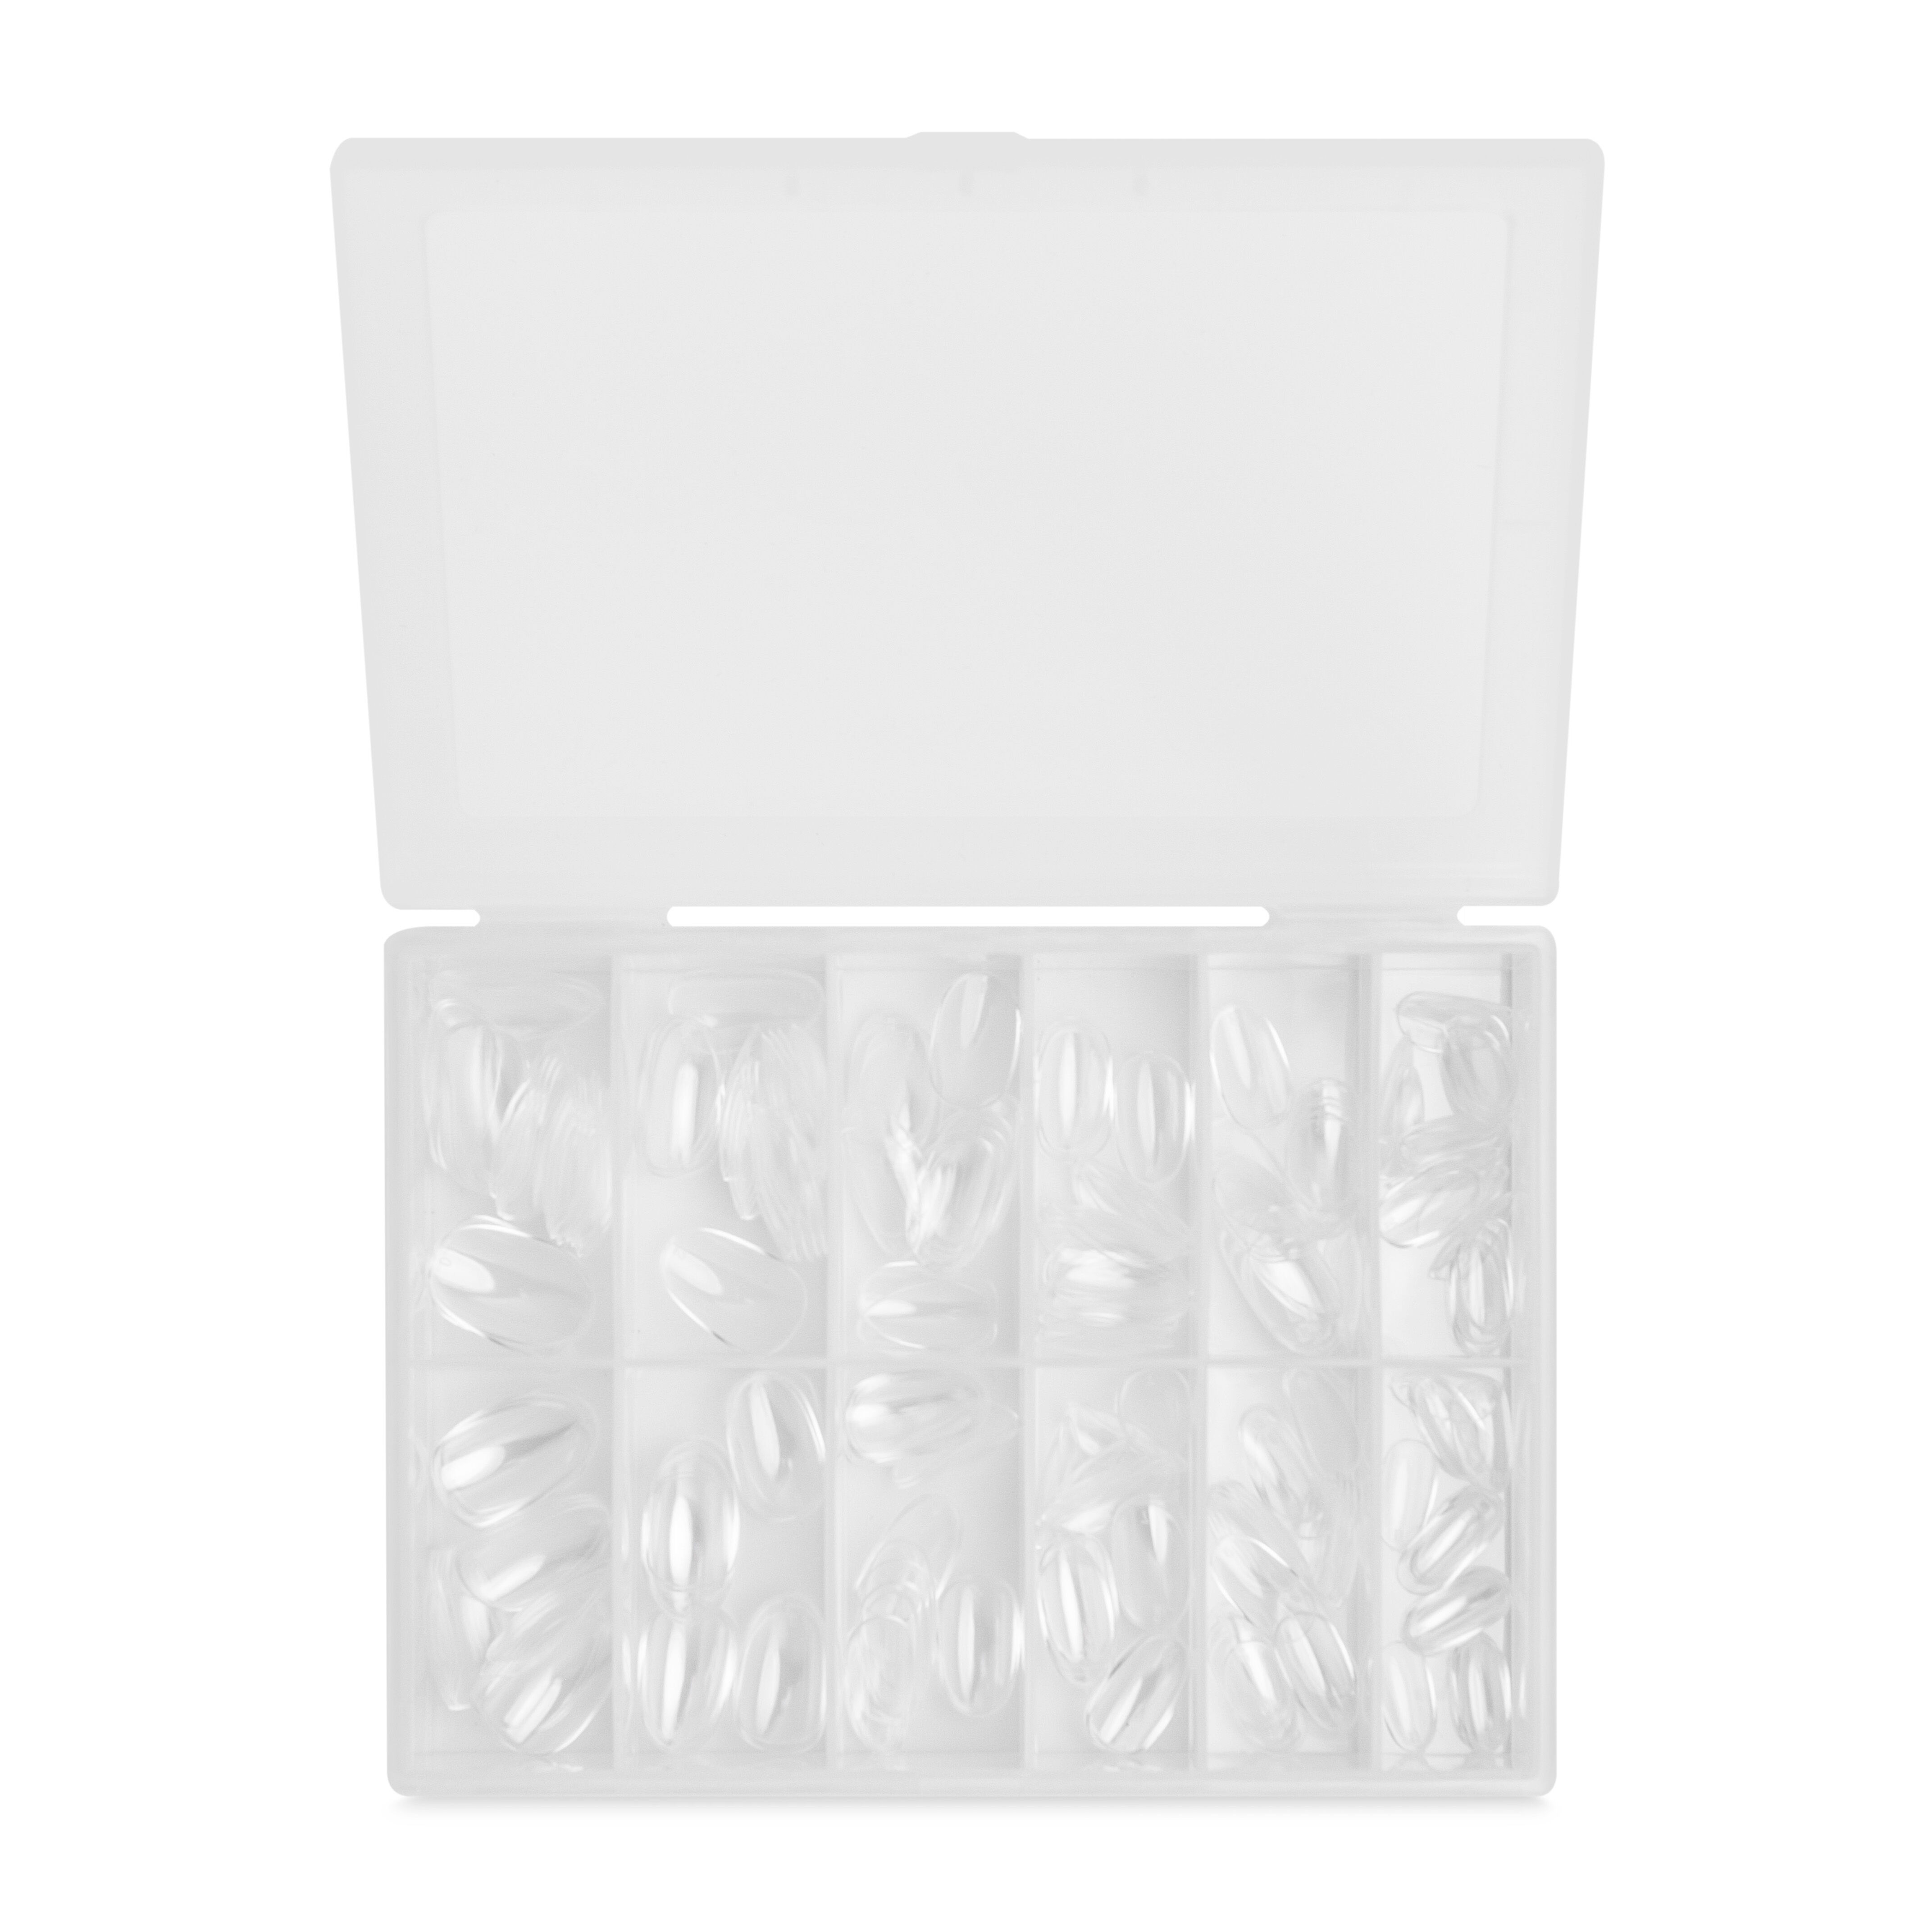 Искусственные ногти а13 натуральные Mani King Instant Nails Full Cover Tips, 240 шт/1 упаковка